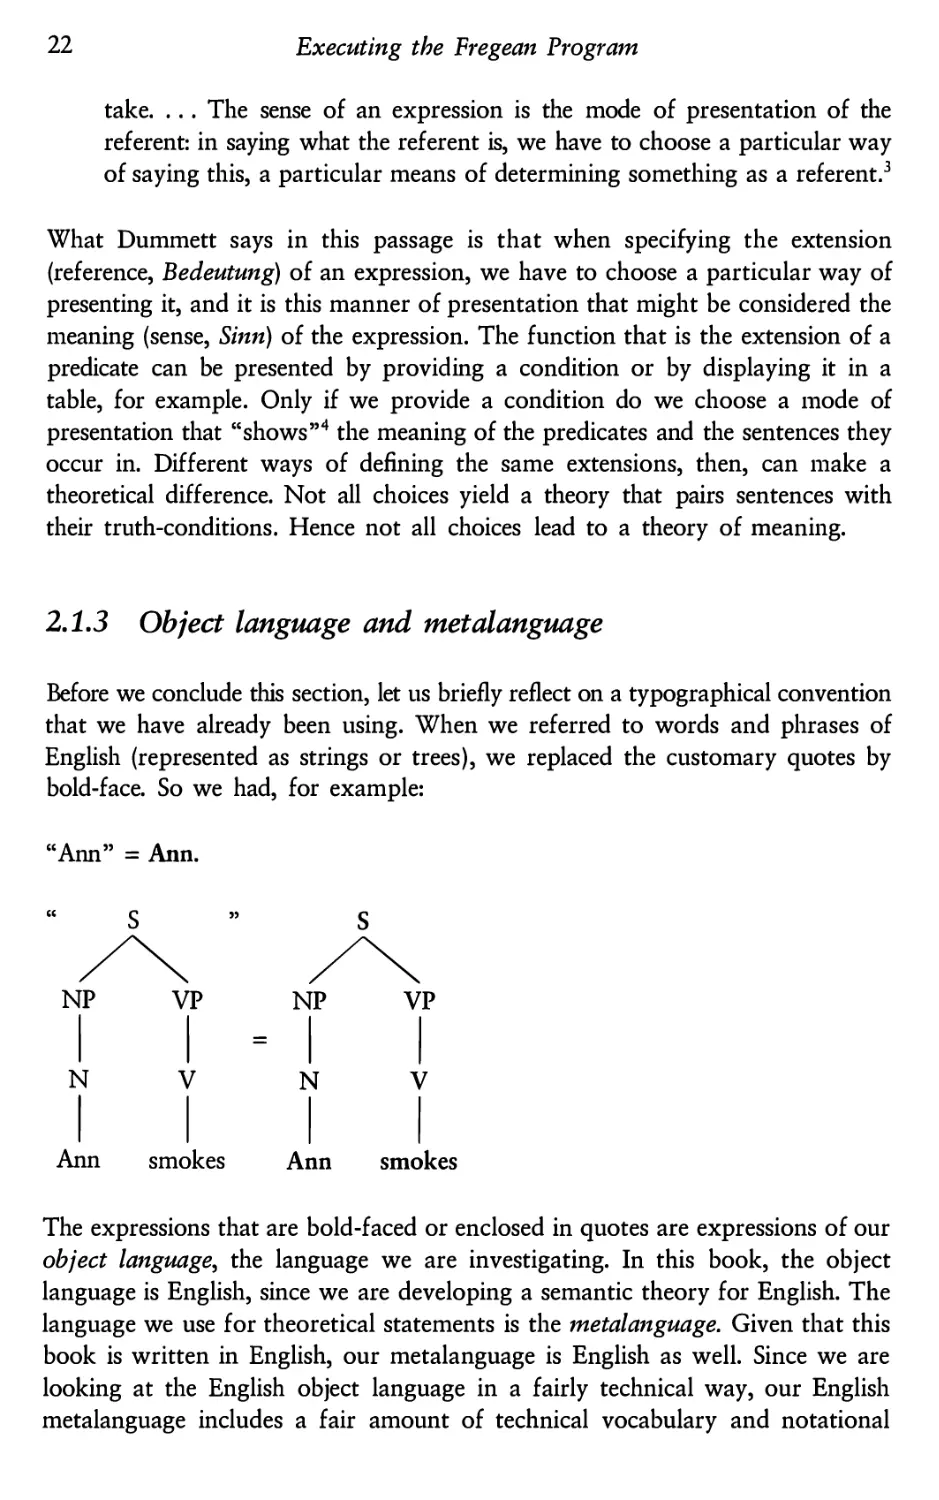 2.1.3 Object language and metalanguage